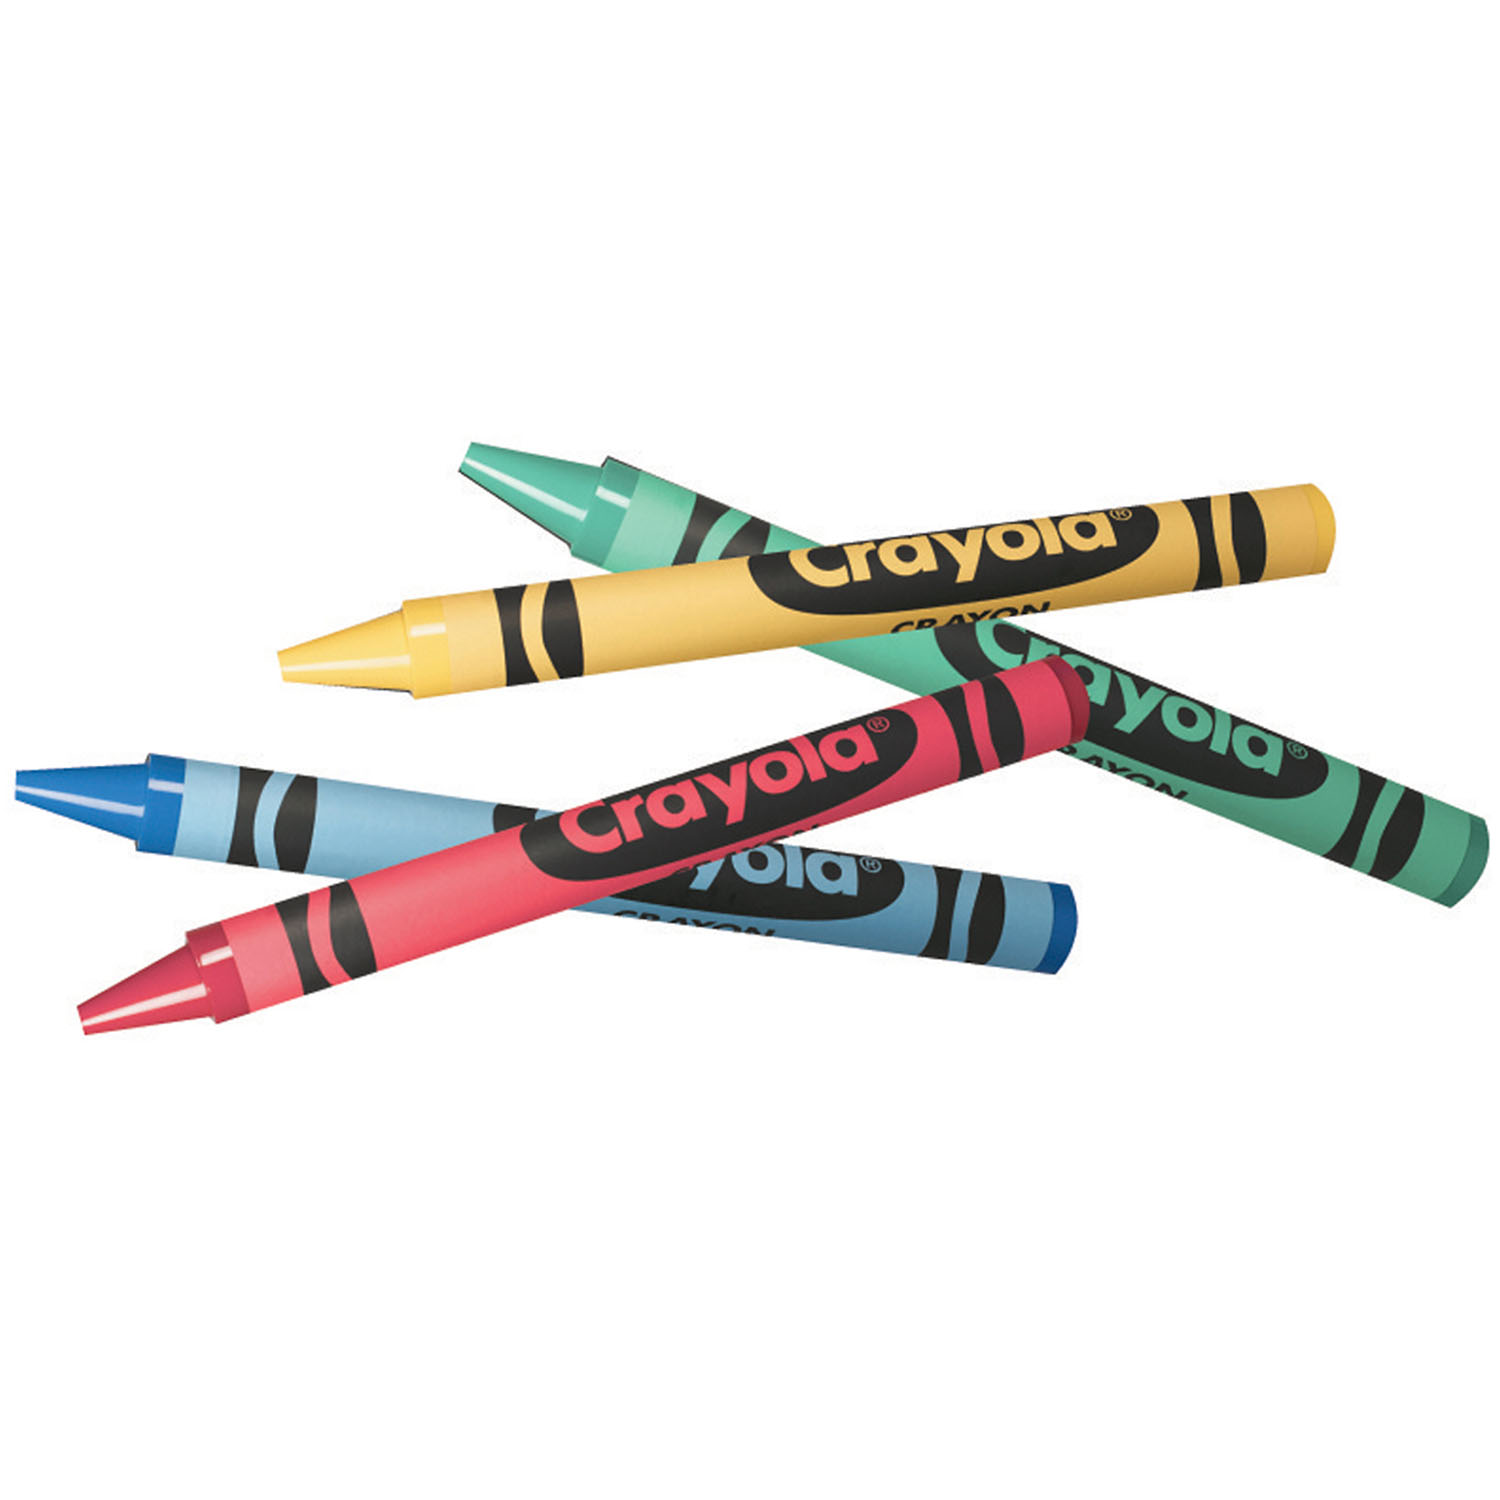 EconoCrafts: Large Size Crayola Crayons 400 ct.